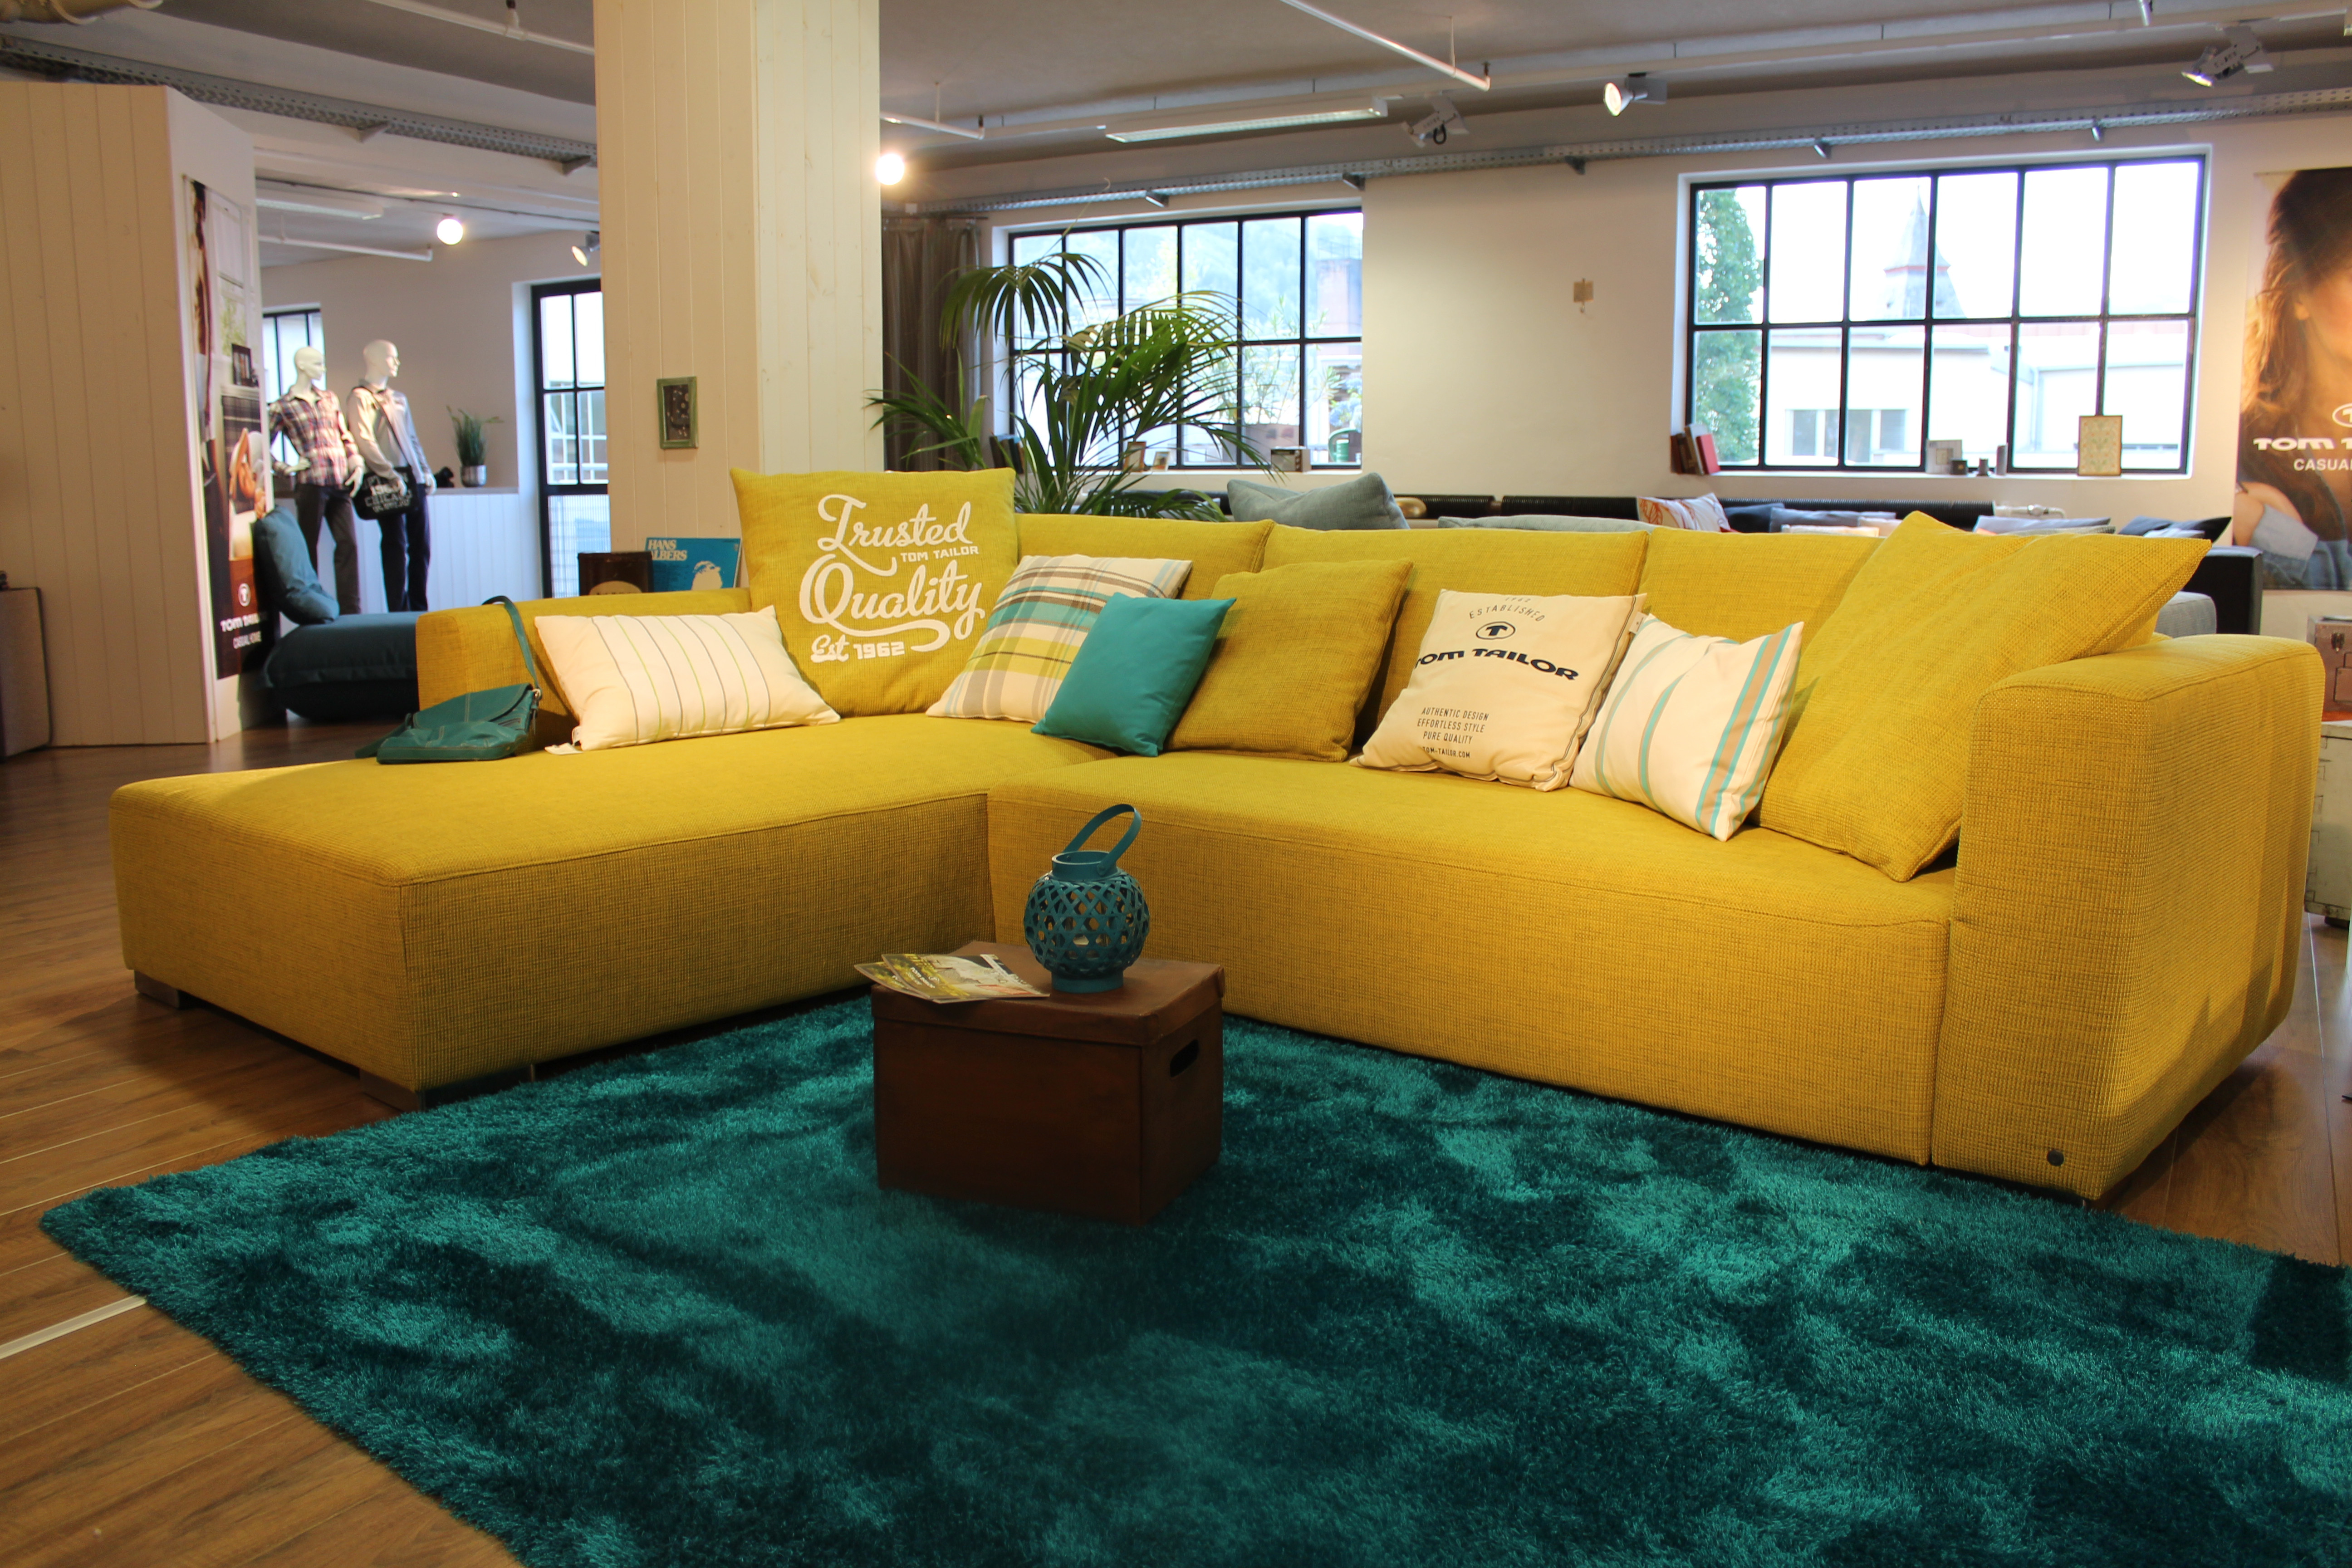 Tom Tailor Sofa
 TOM TAILOR Colors – New colorful Sofa Range